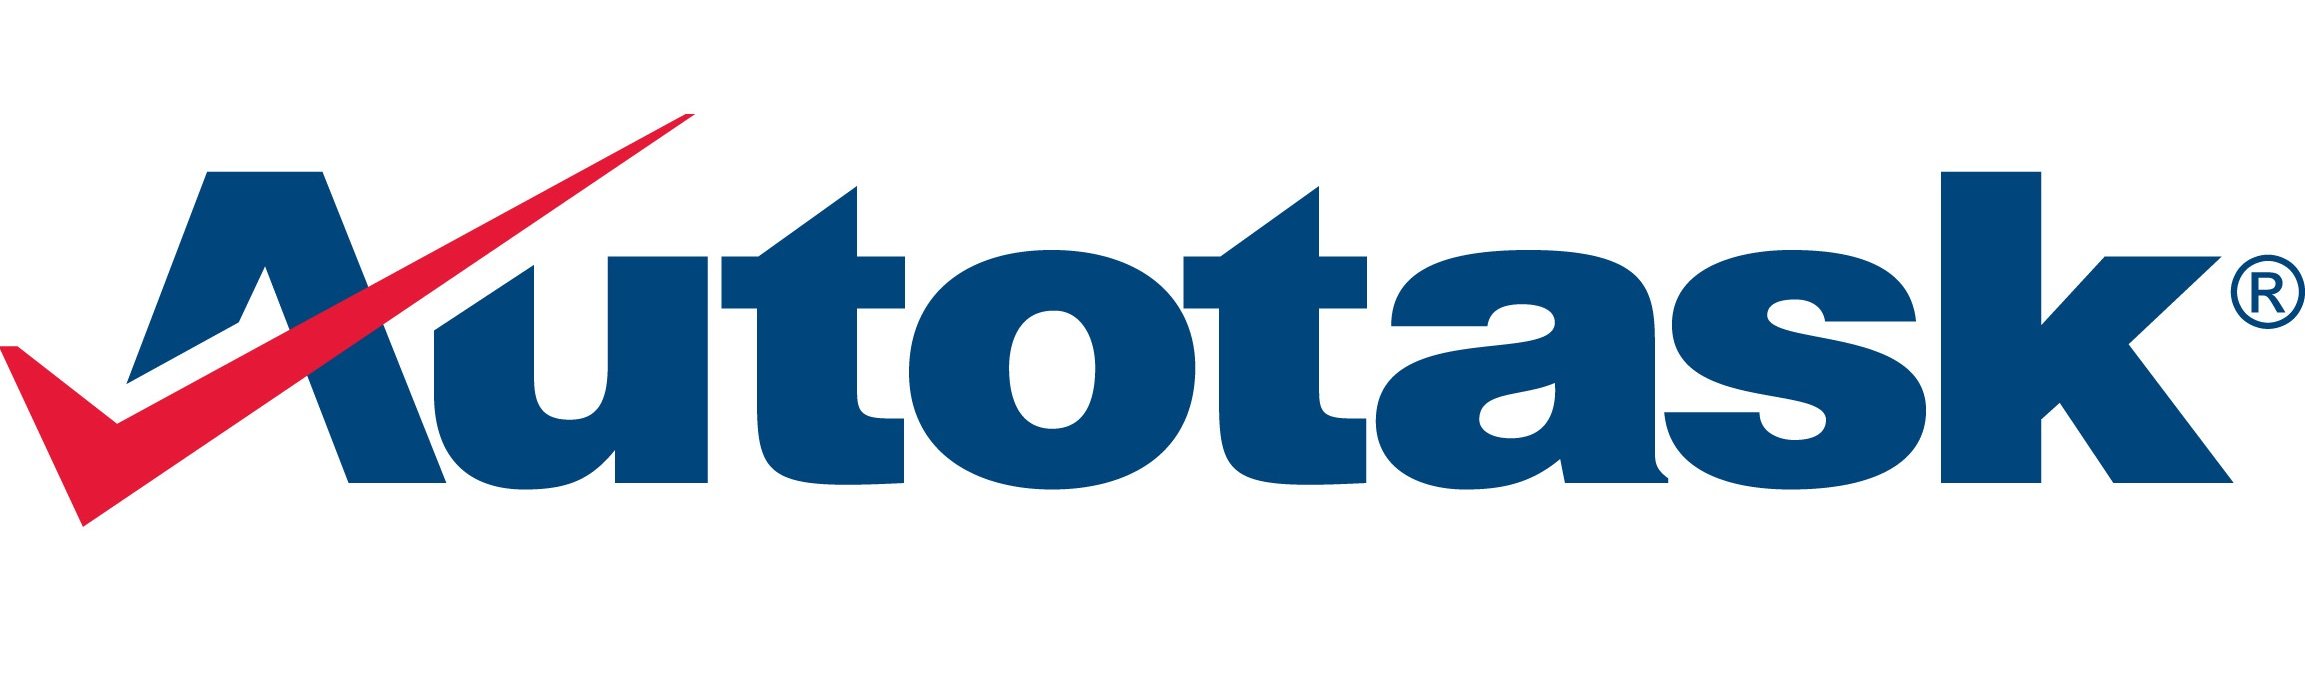 Autotask-Logo